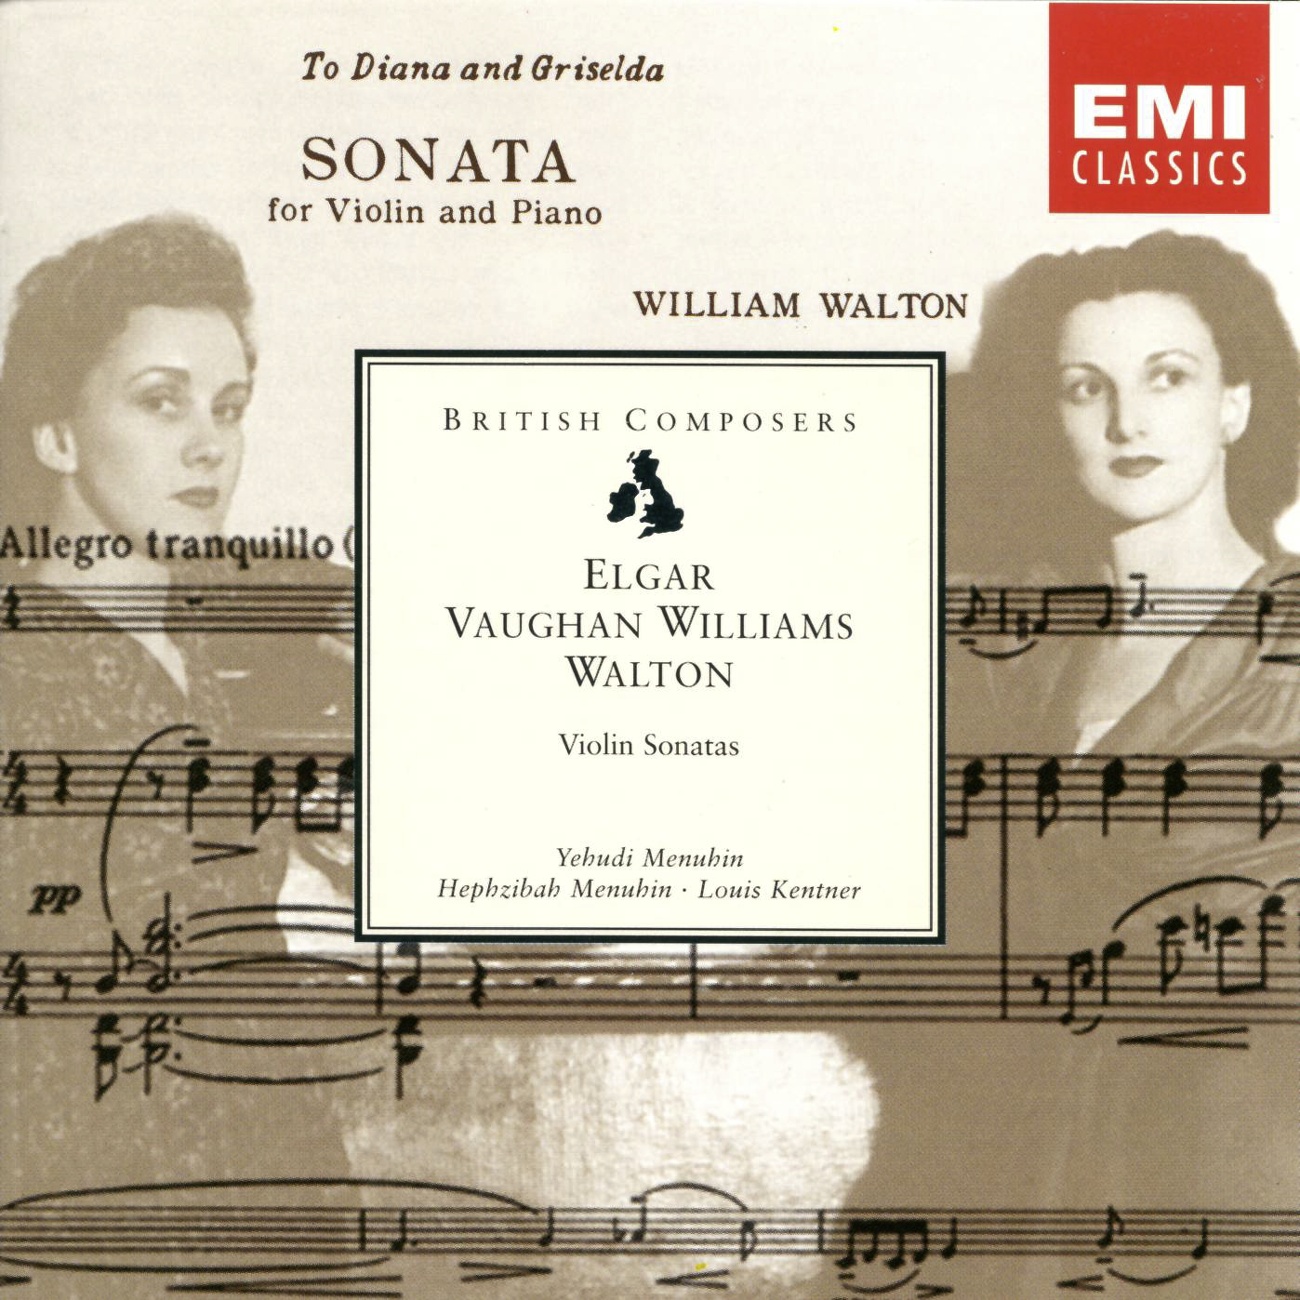 Variation I (Violin Sonata, Movement 3b)